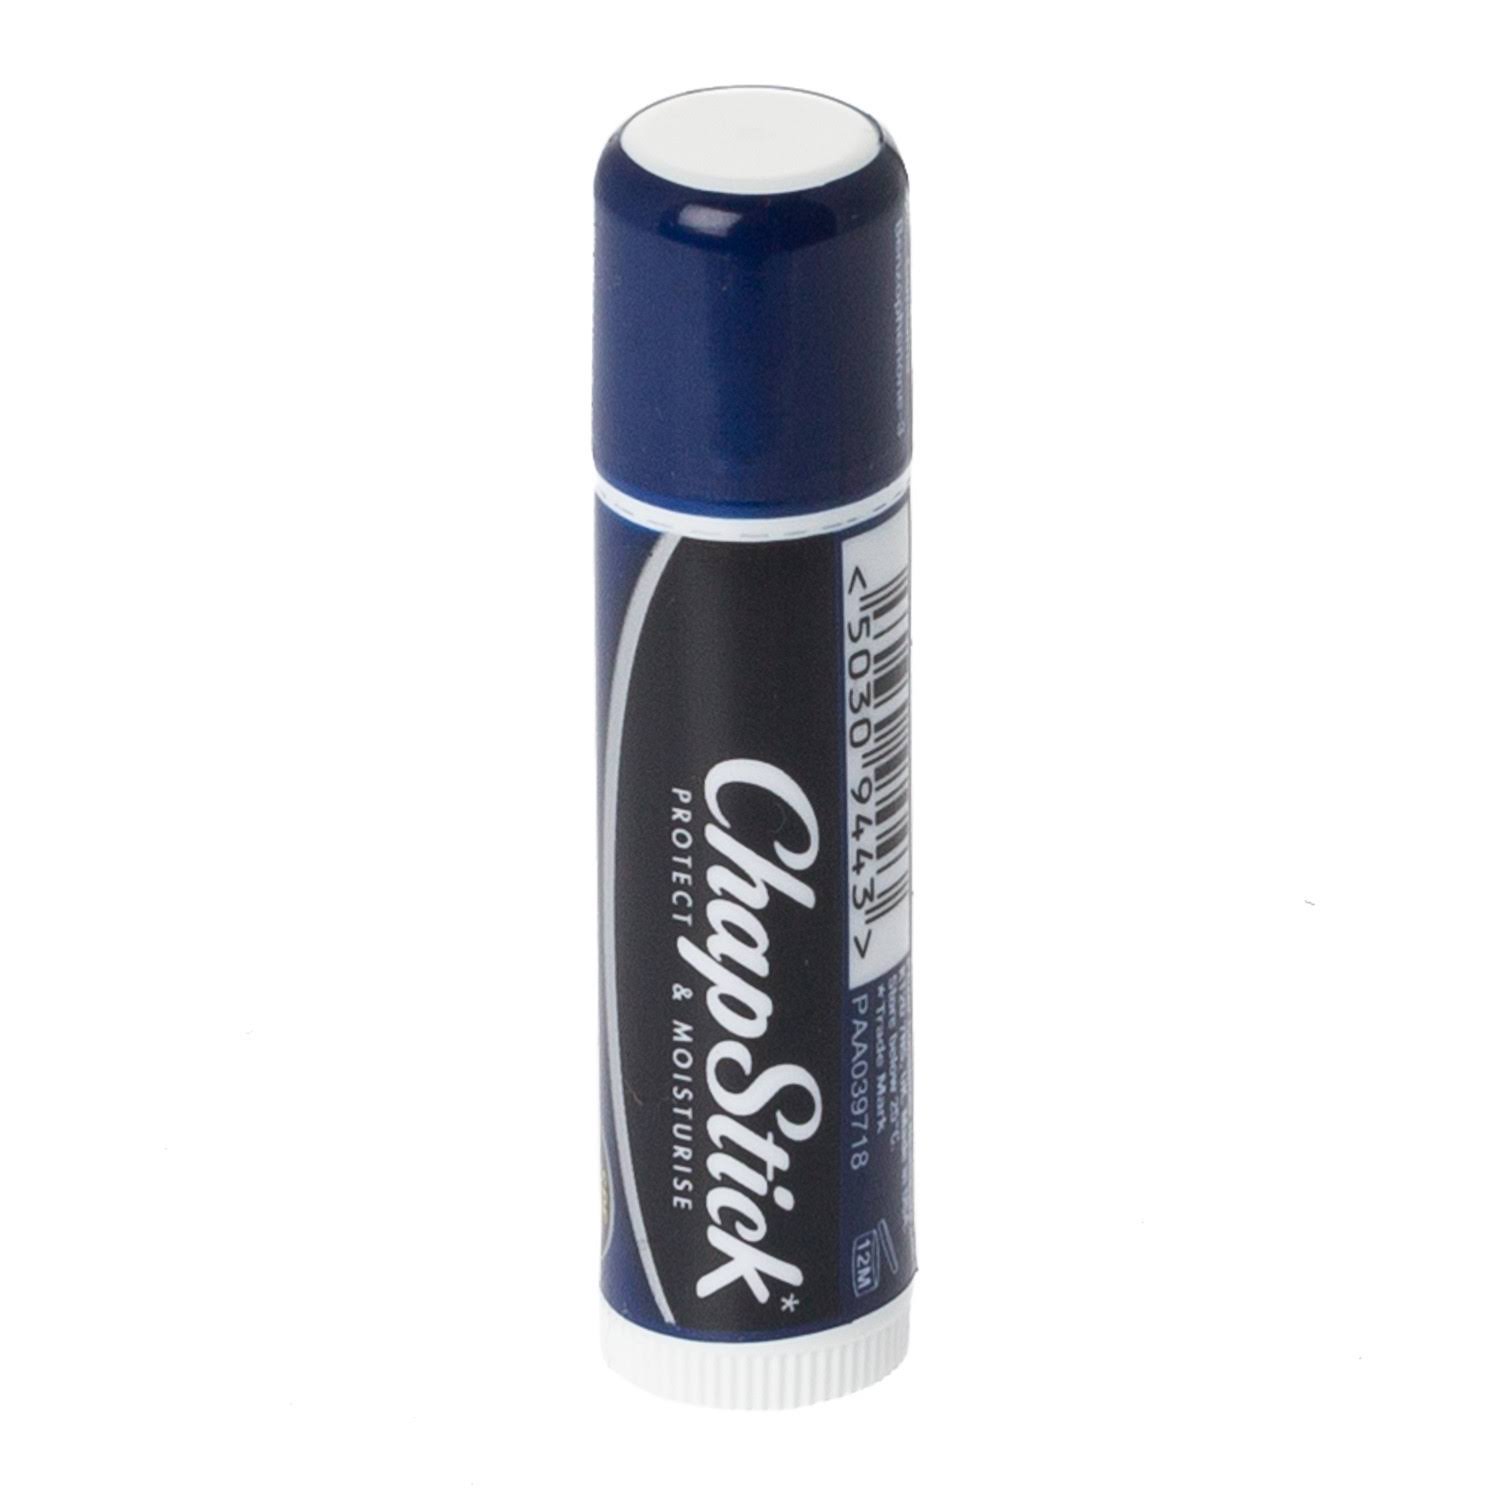 ChapStick Classic Original Lip Balm - SPF 10, 1oz